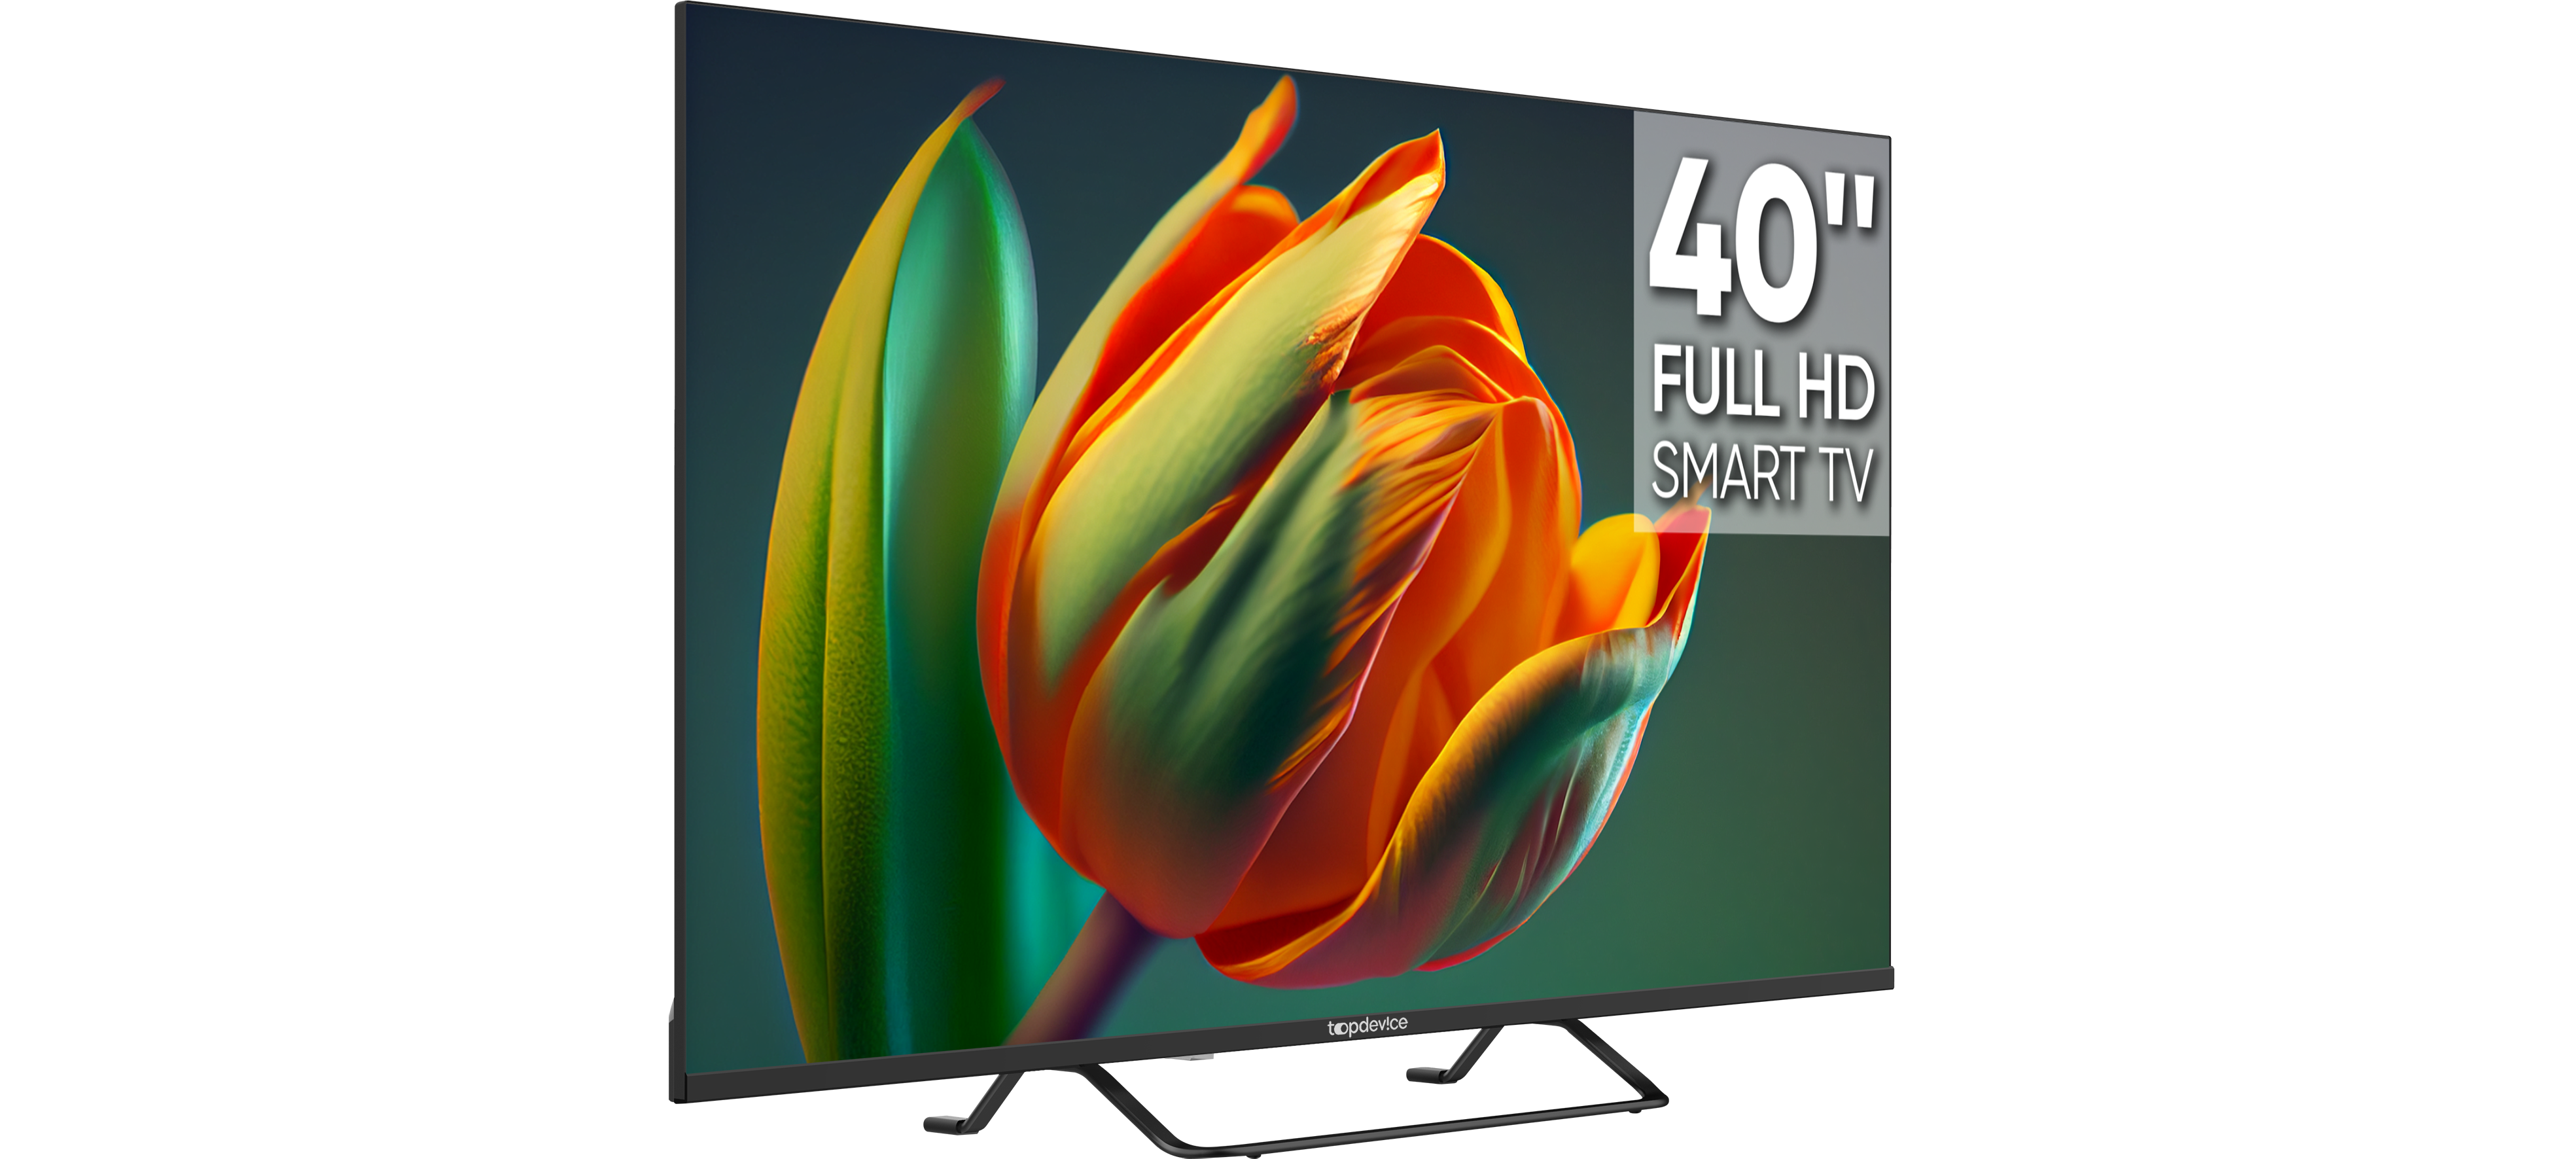 Топ-5 недорогих телевизоров Full HD